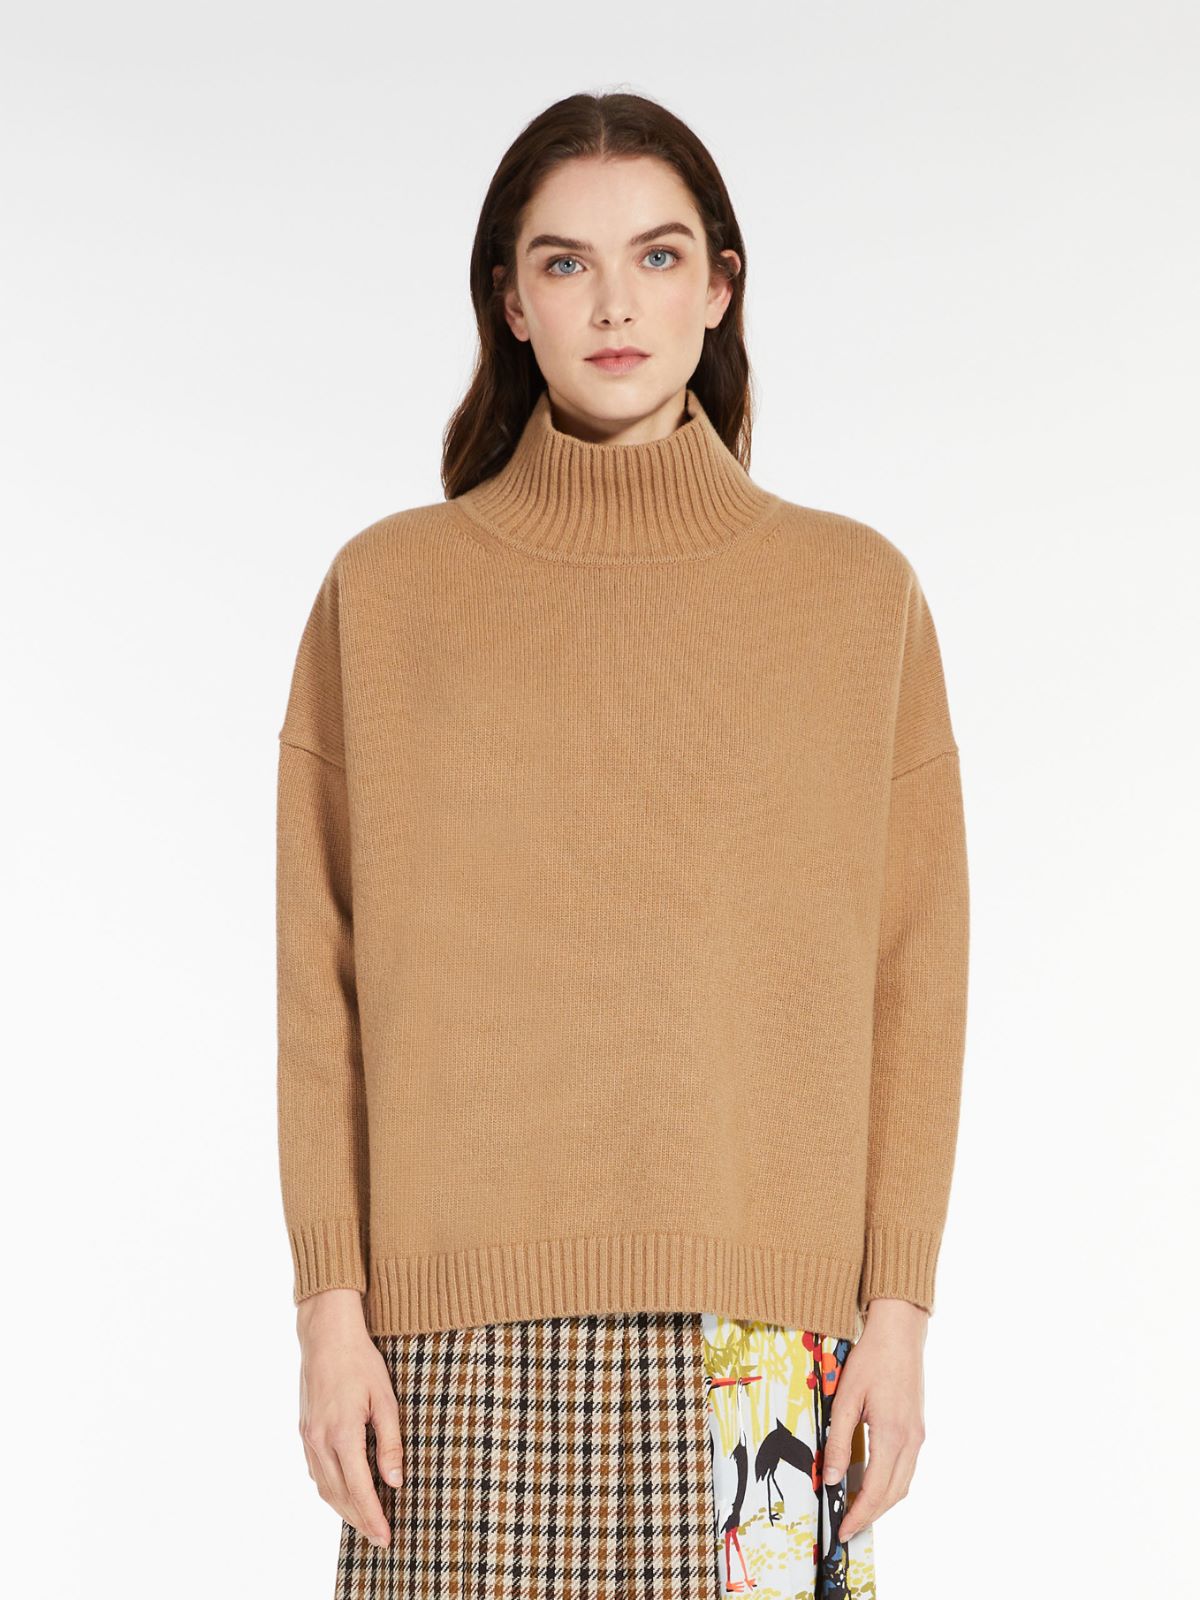 Carded wool sweater - CAMEL - Weekend Max Mara - 2